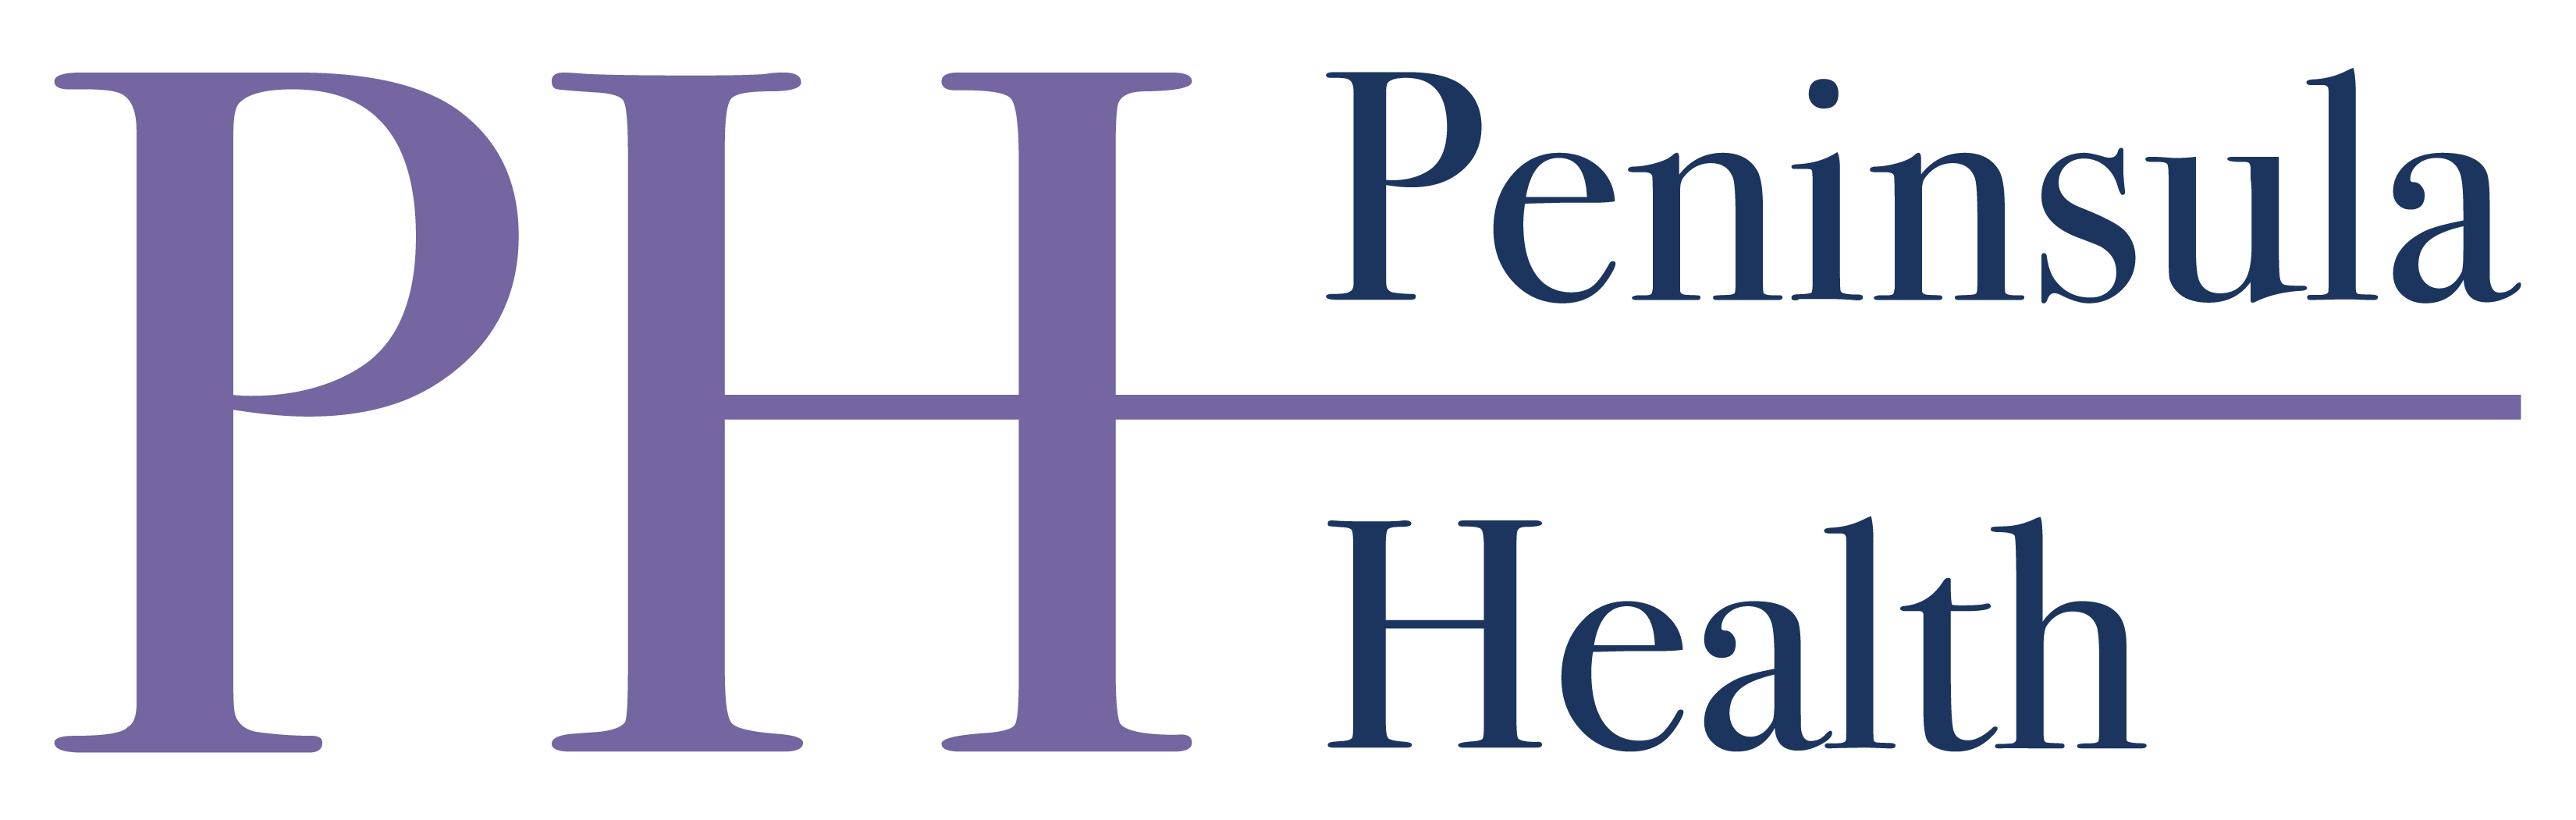 Peninsula Health Logo Final